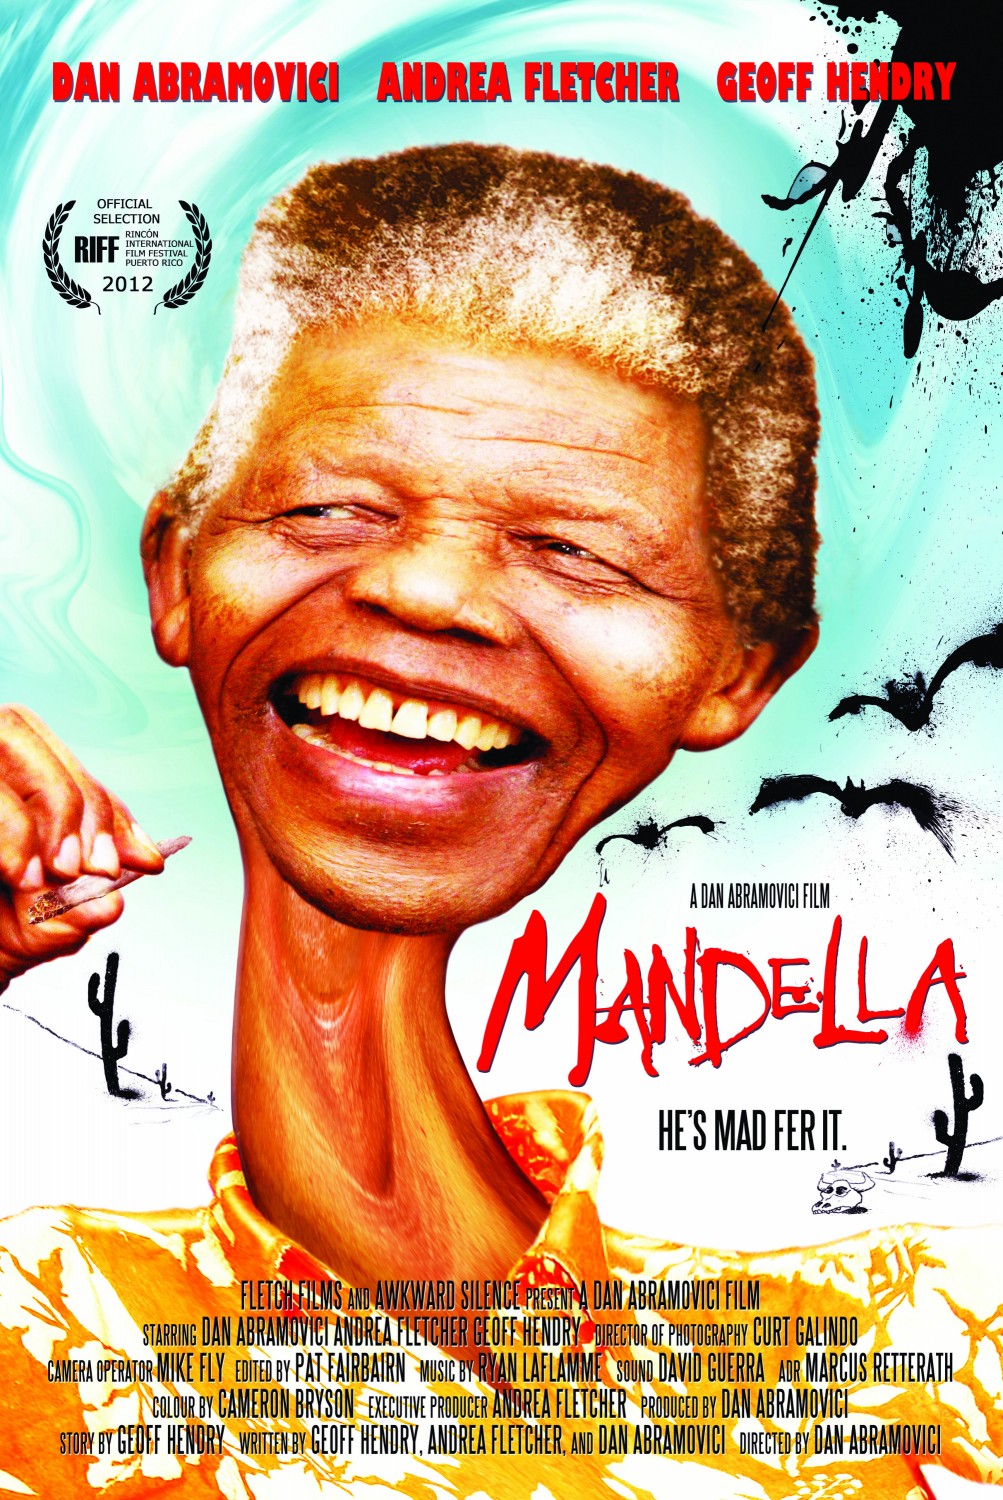 Extra Large Movie Poster Image for Mandella